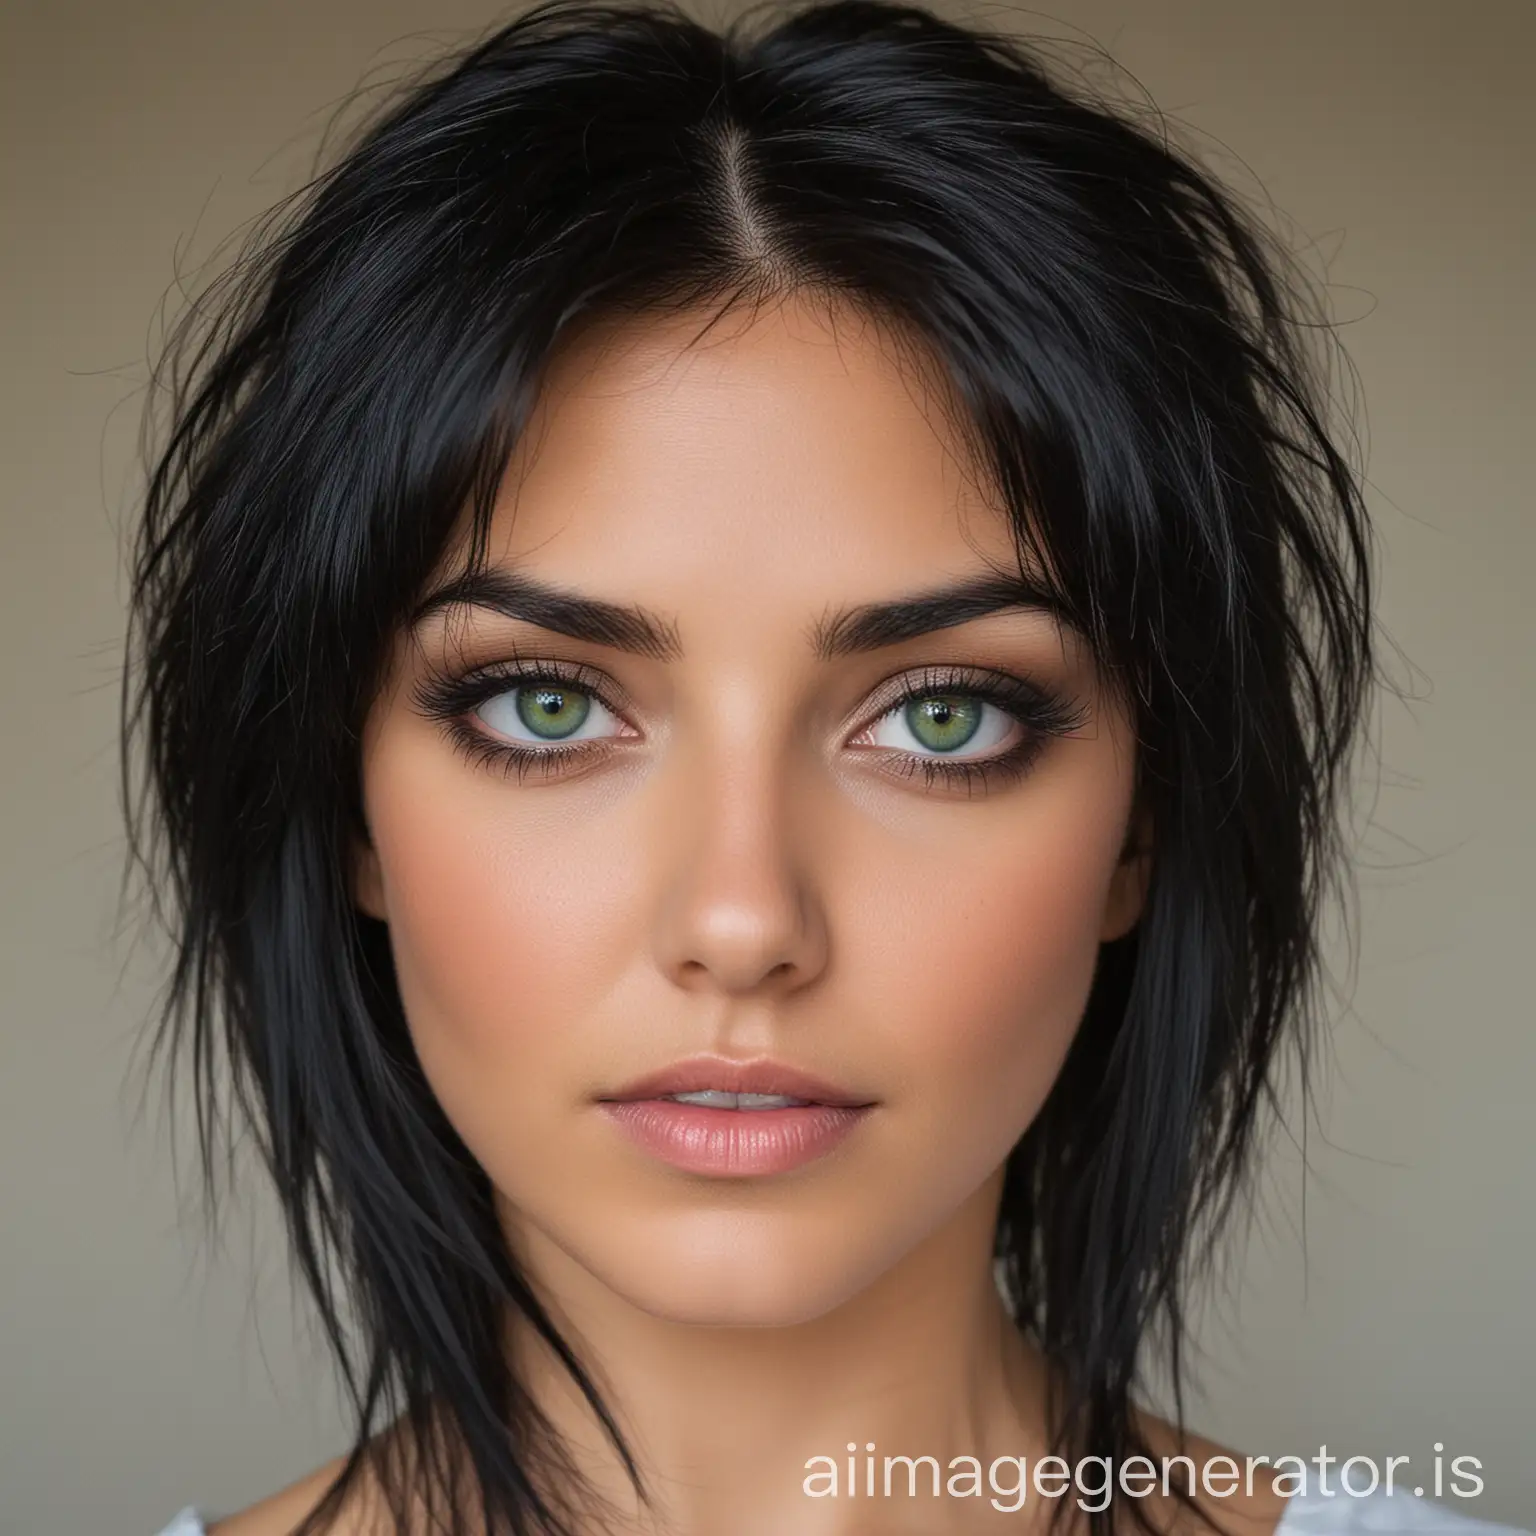 Elegant-Woman-with-Lustrous-Black-Hair-and-Striking-Green-Eyes